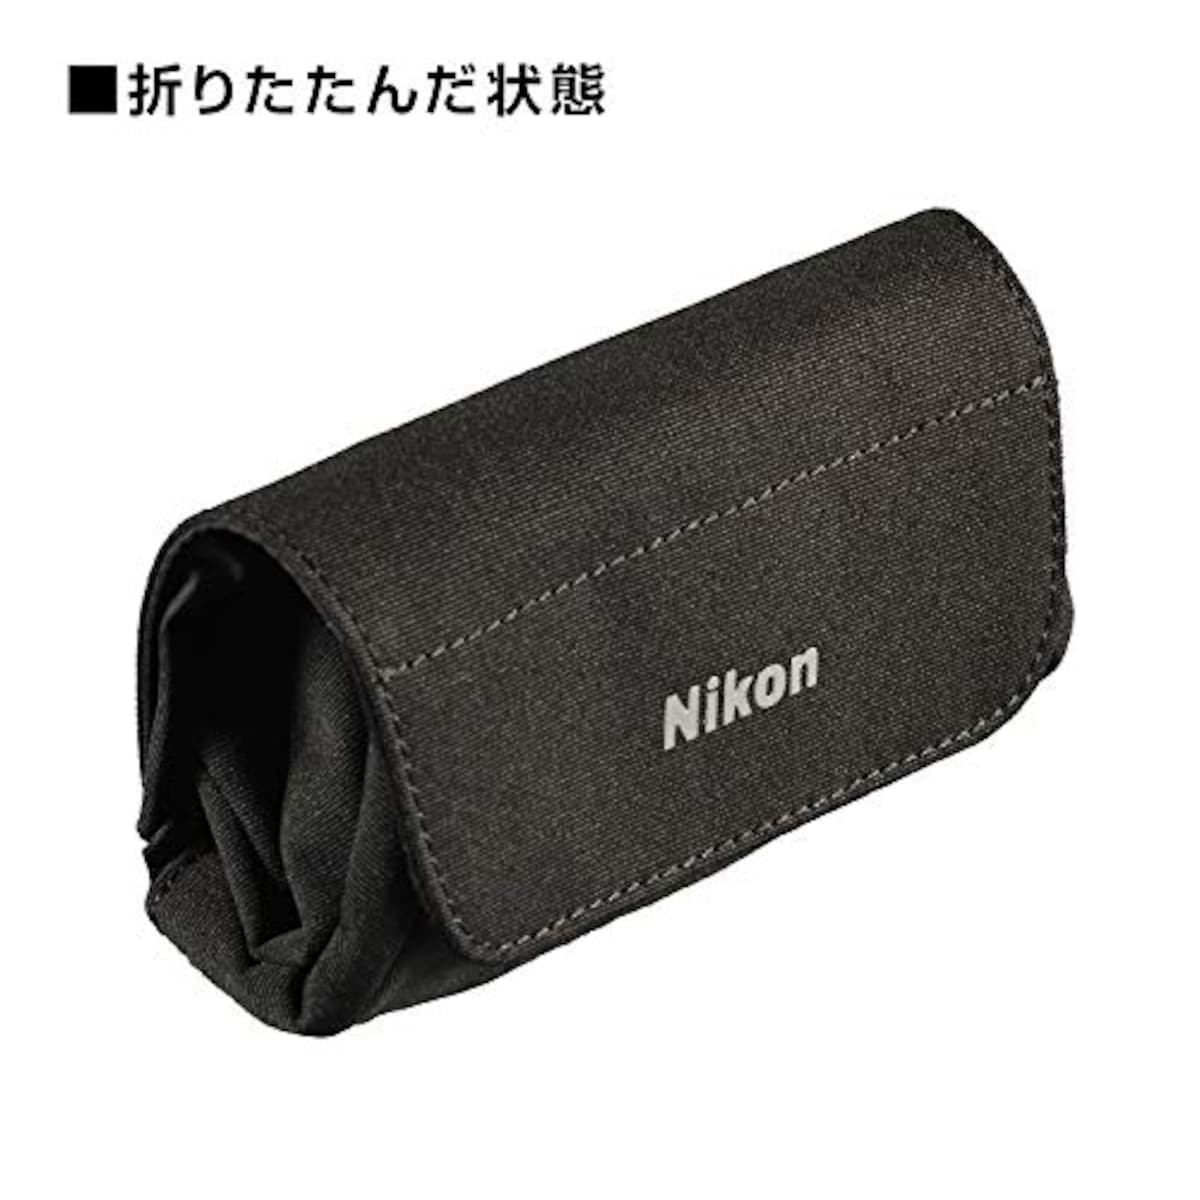  Nikon ソフトケース CS-NH60 BK ブラック画像3 